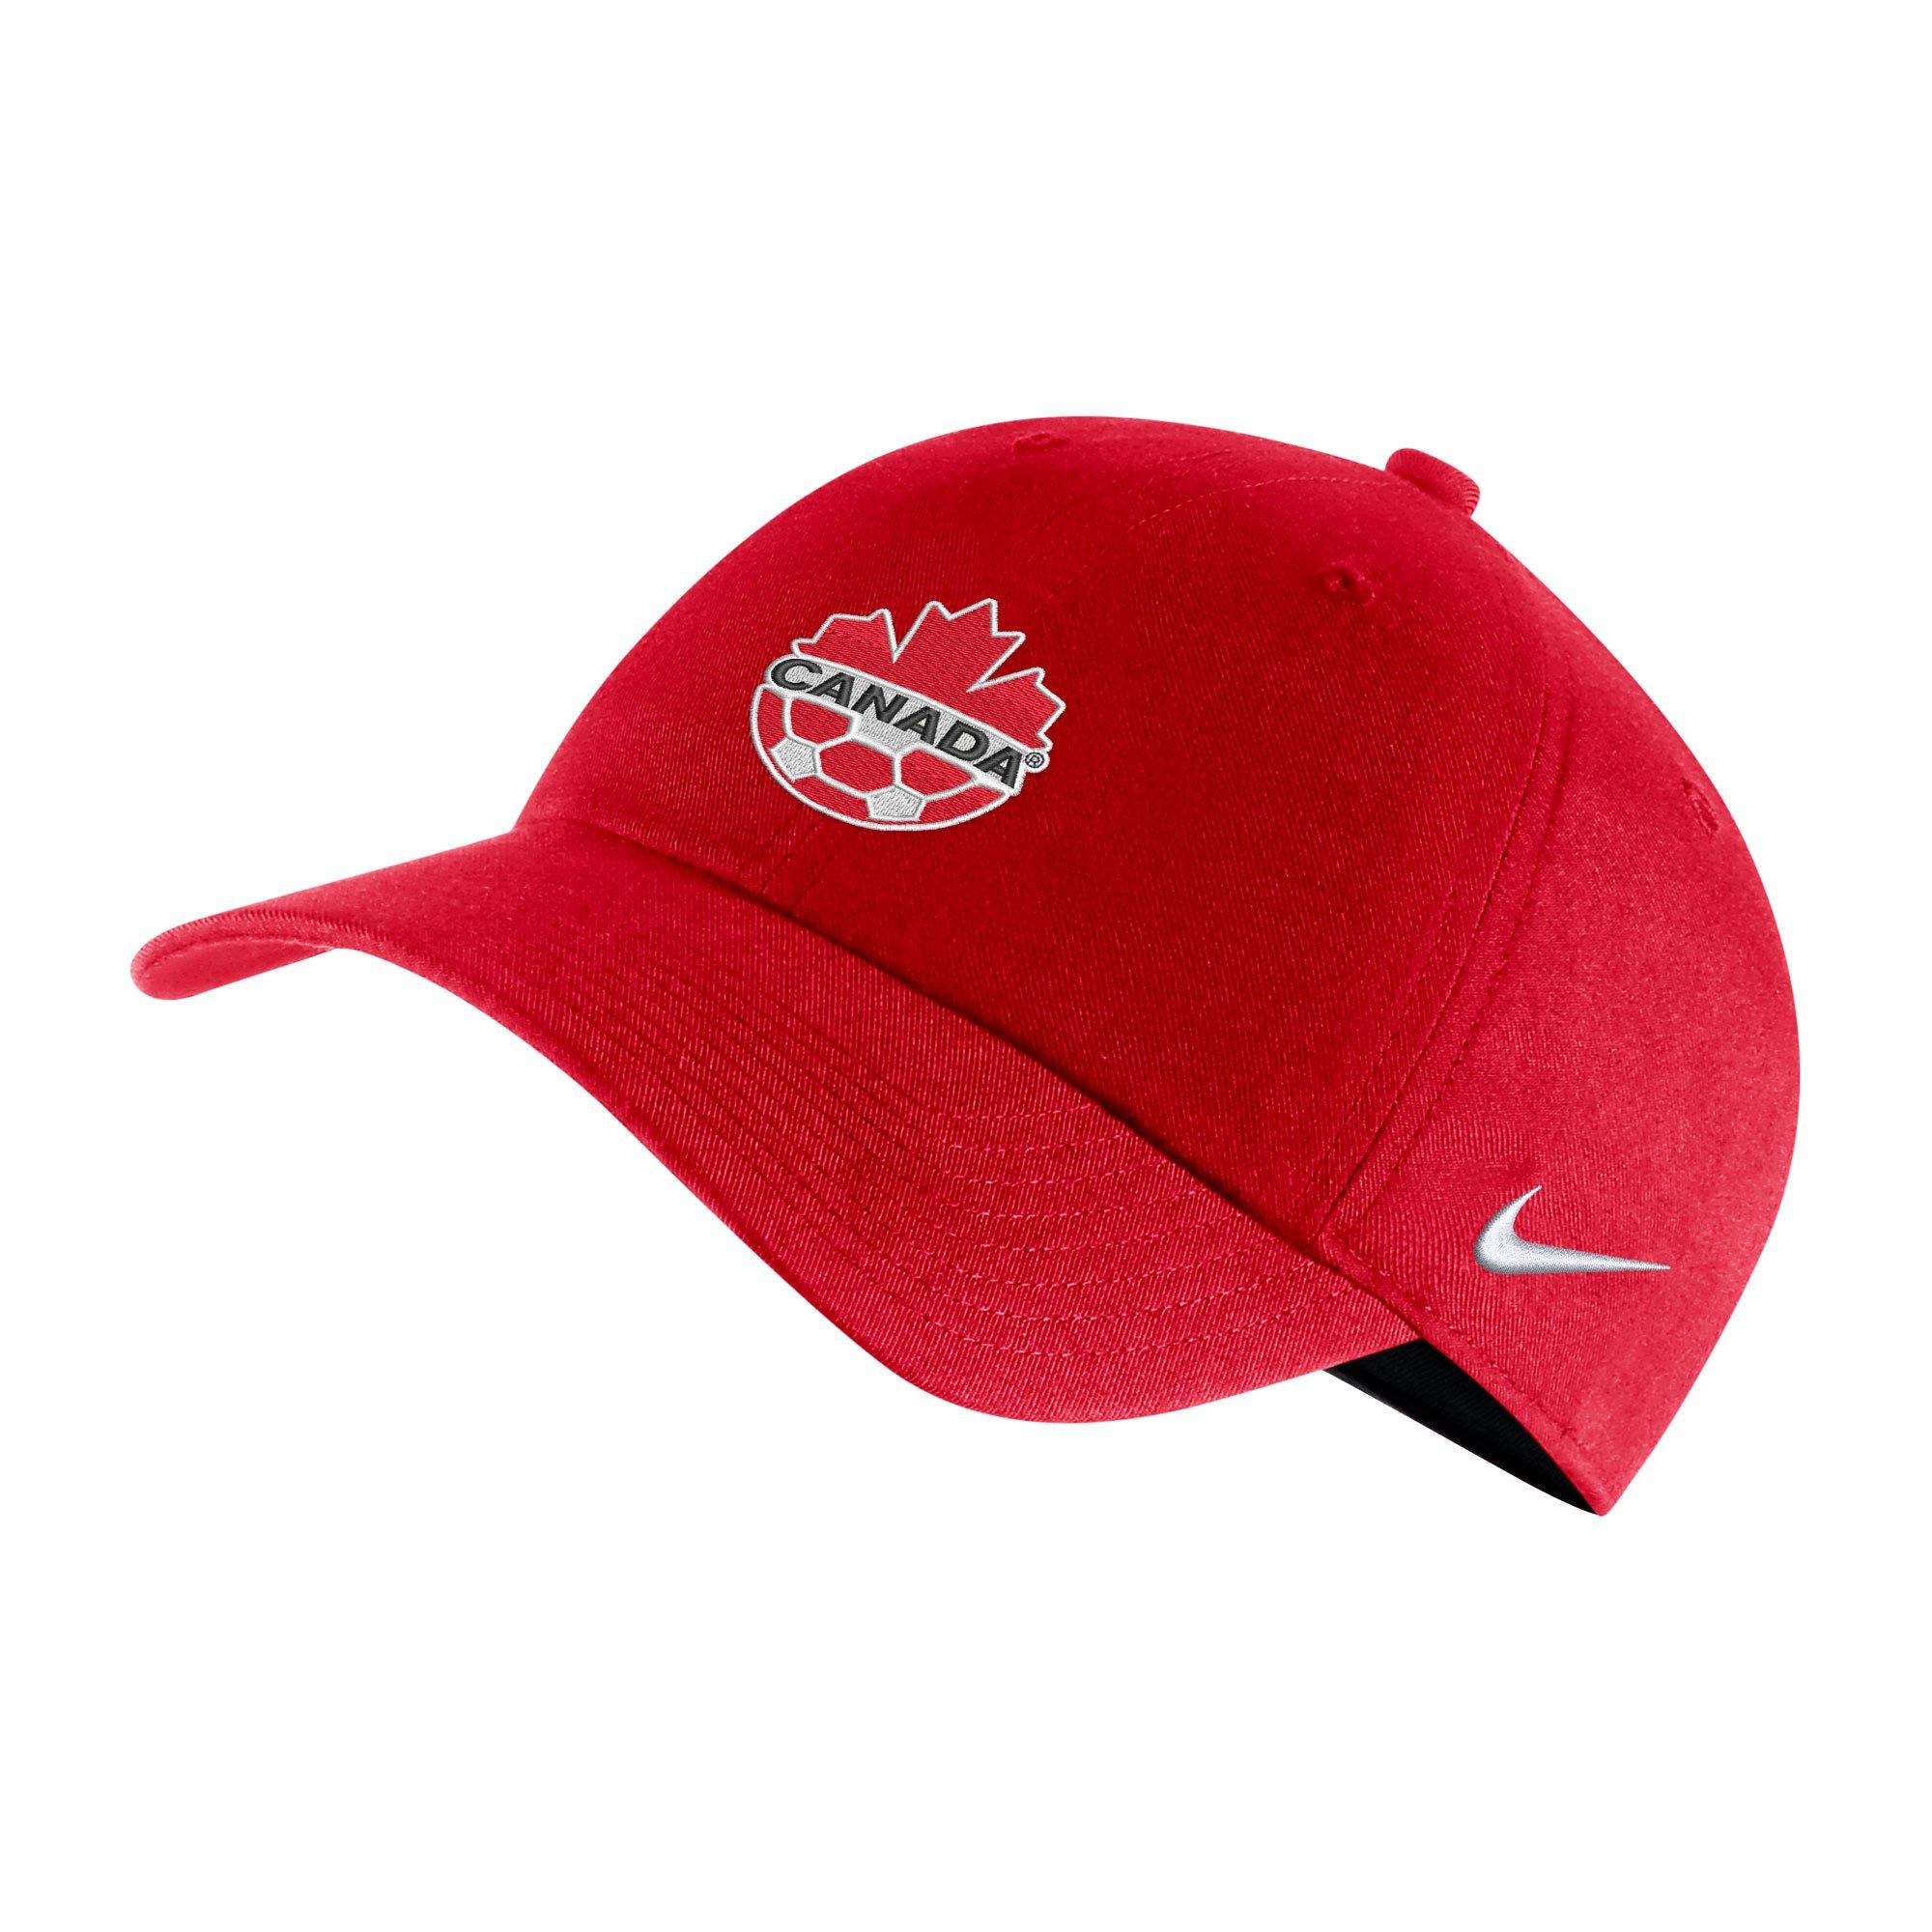 Hats & Caps  Team Town Sports